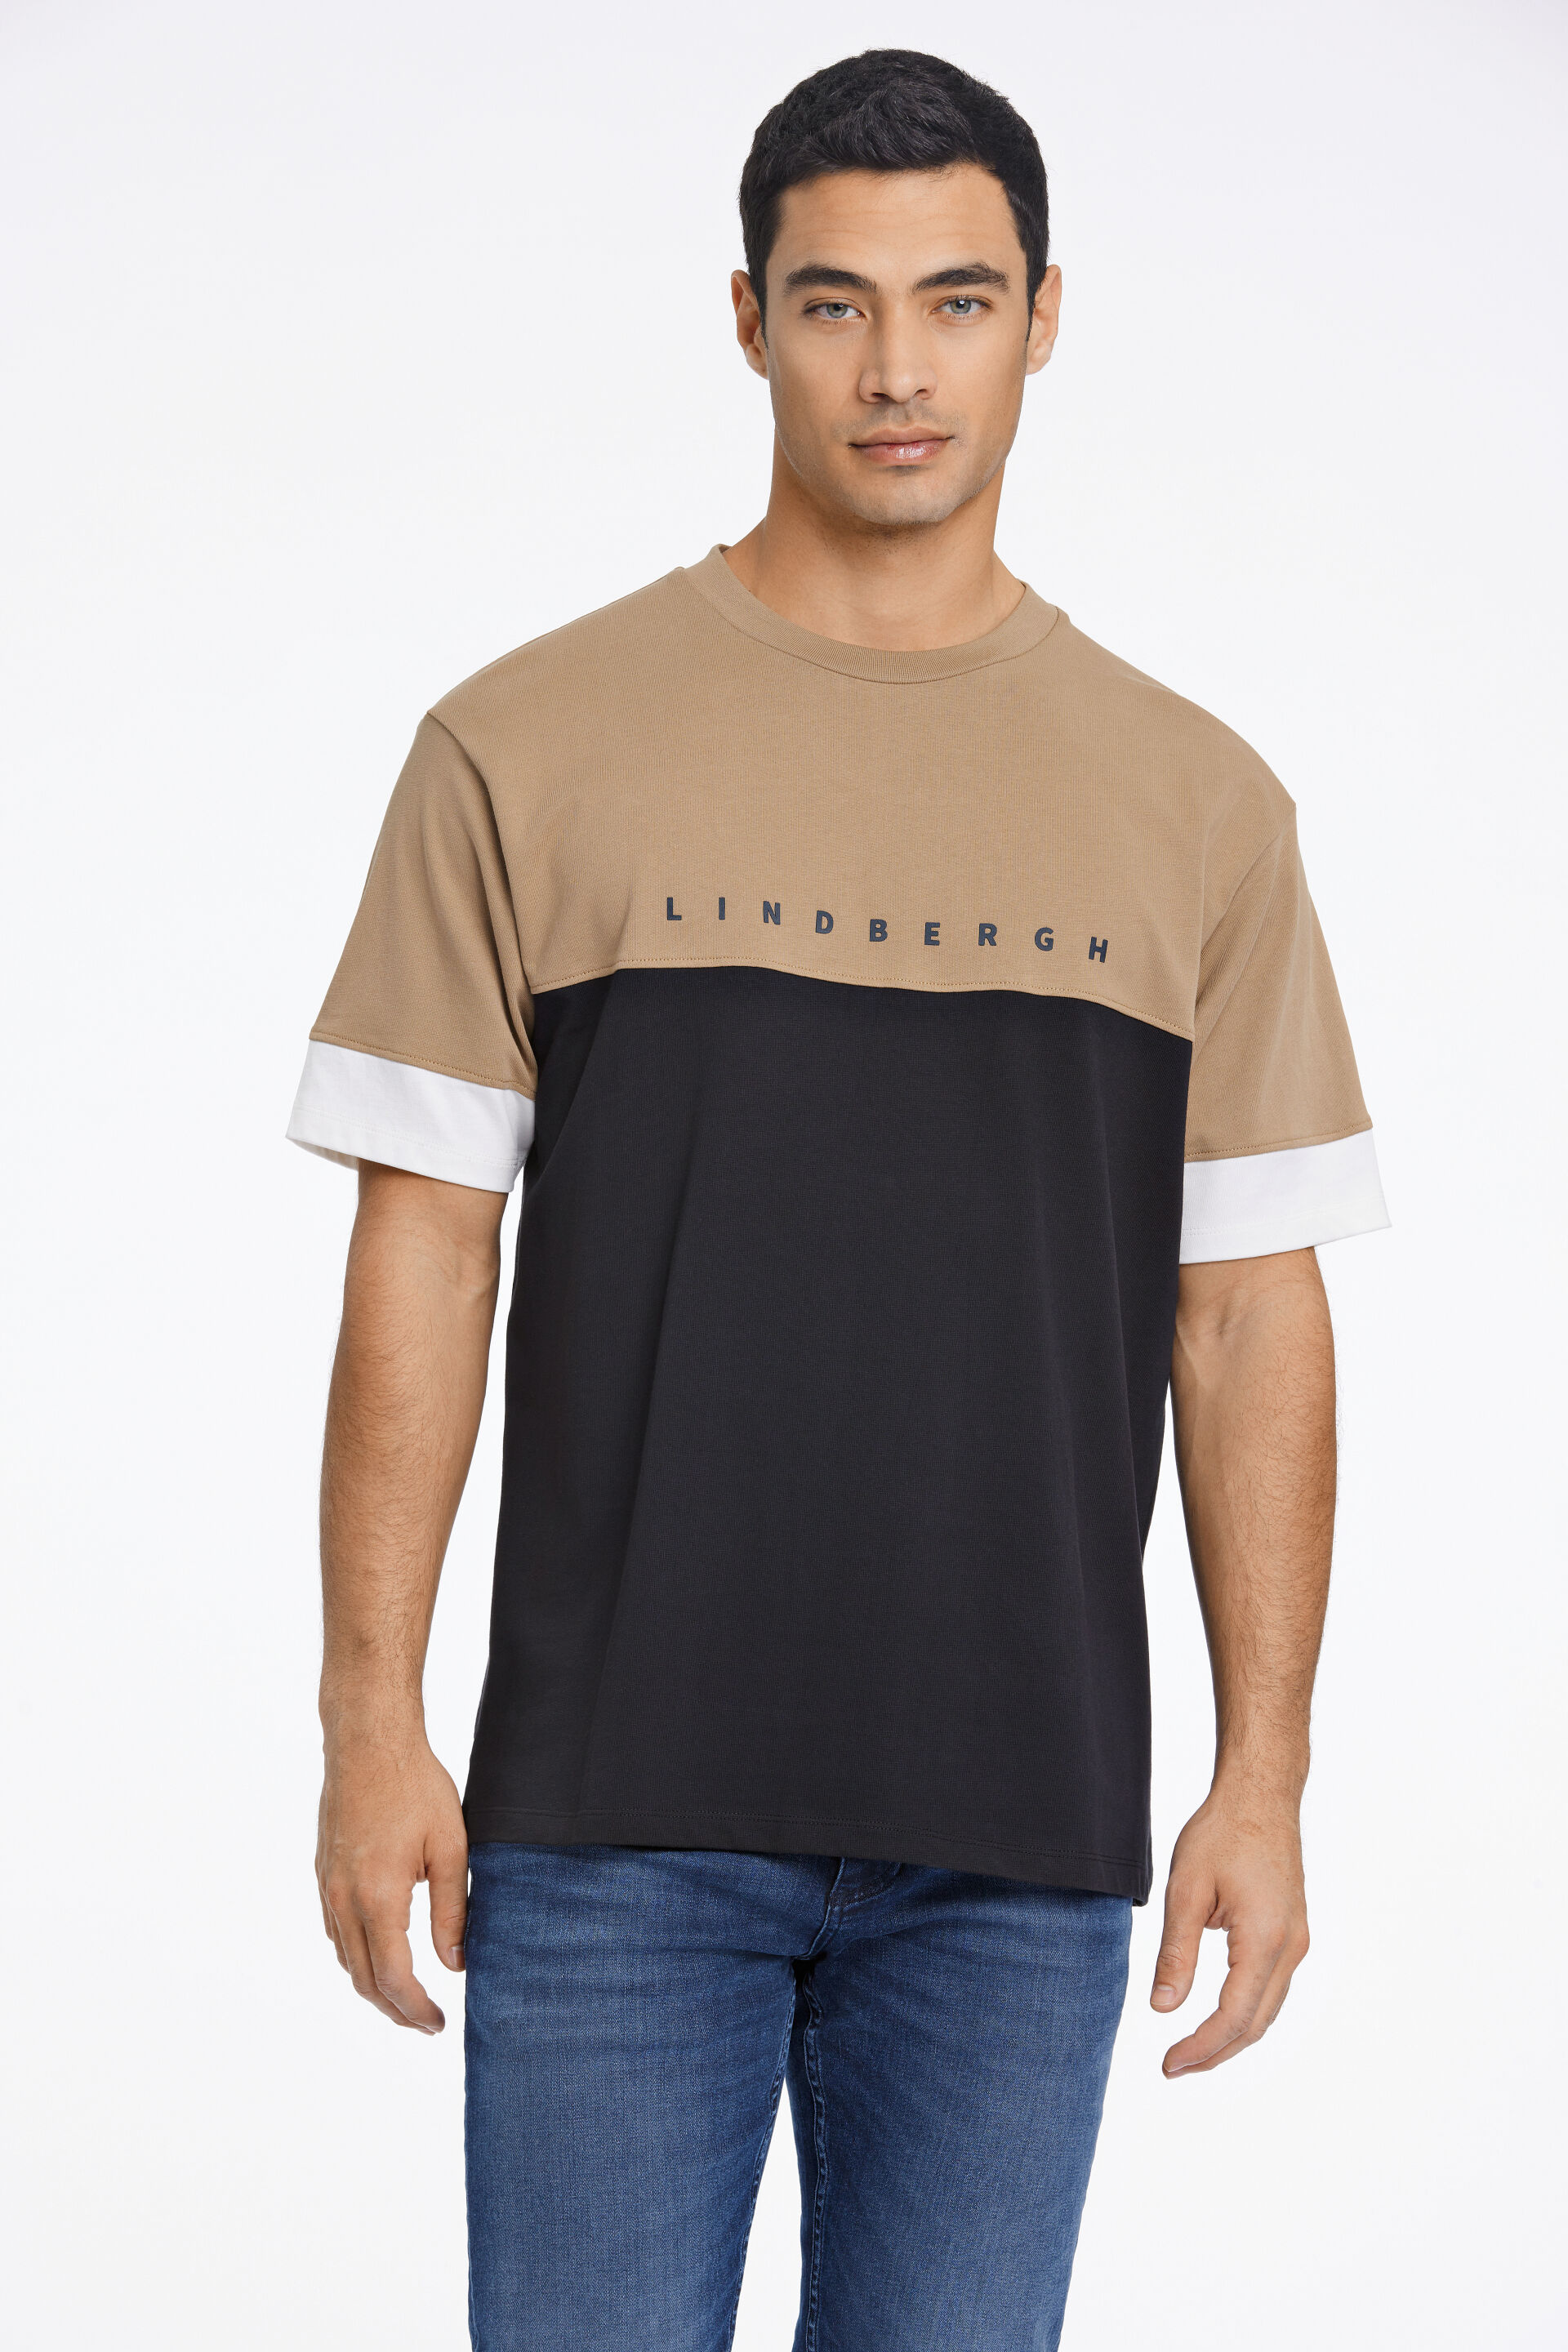 Lindbergh  T-shirt Sand 30-400254